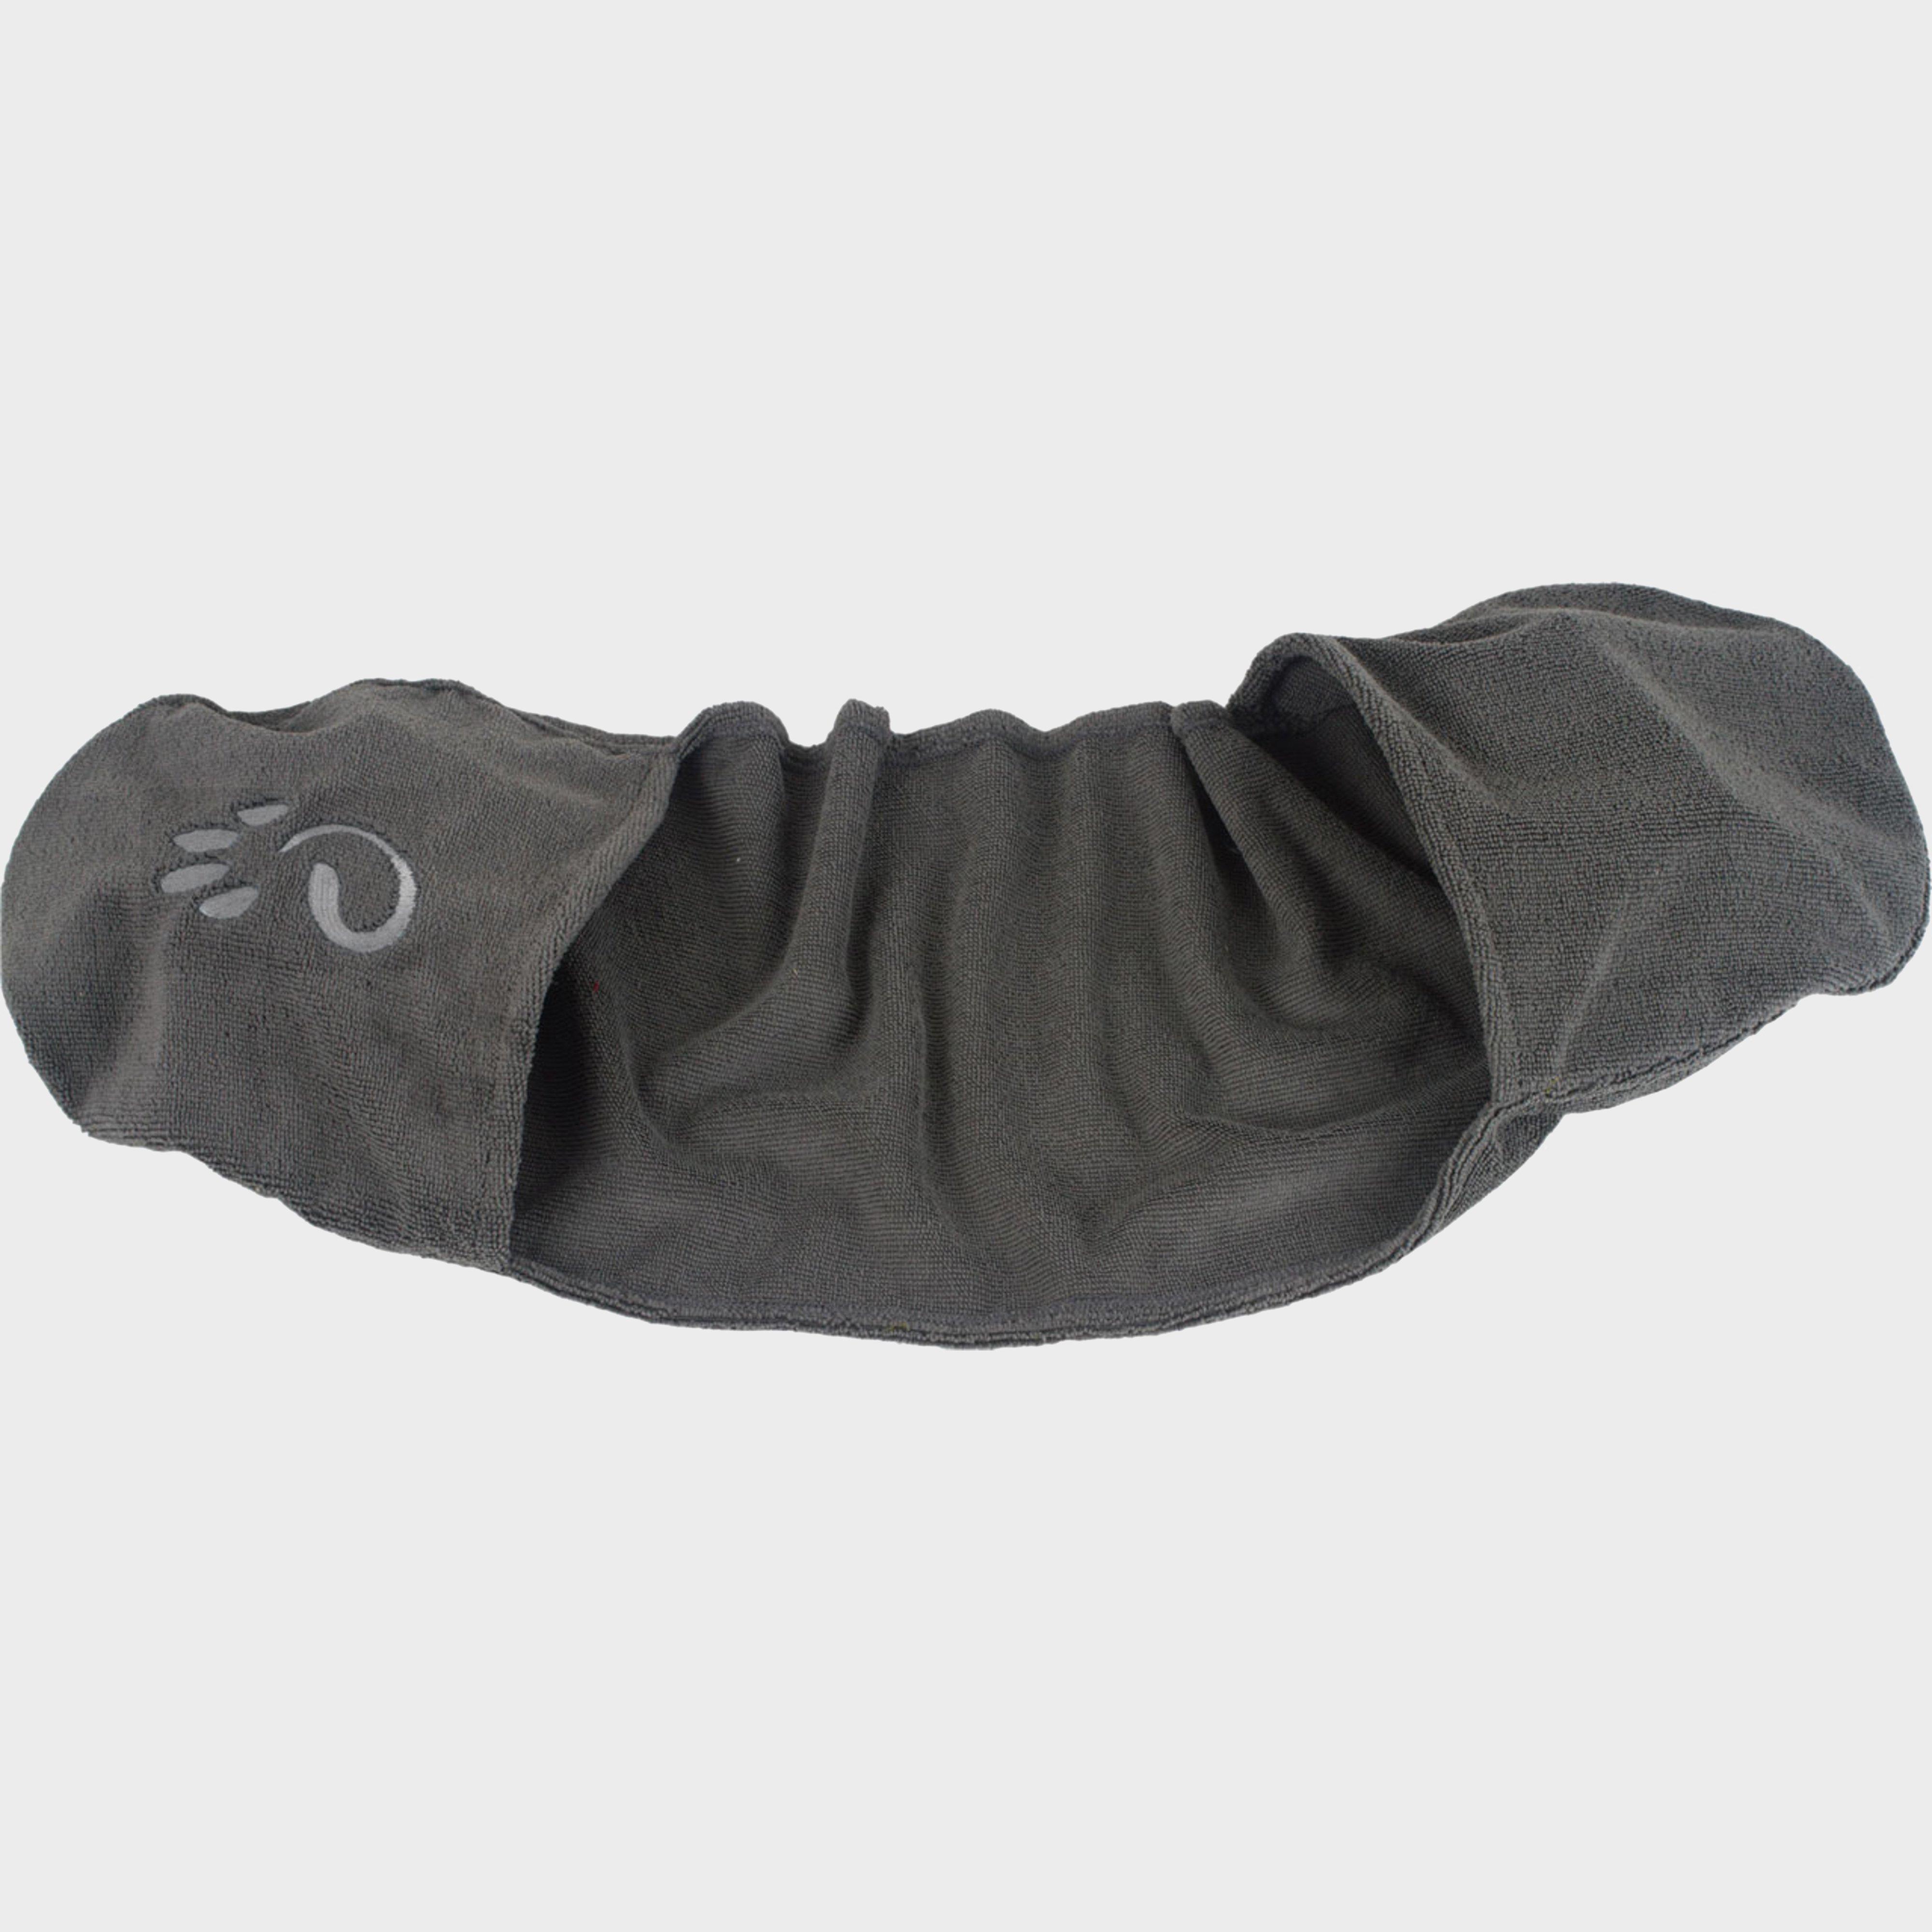 Image of Lifemarque Muddy Dog Towel - Grey/Towel, Grey/TOWEL